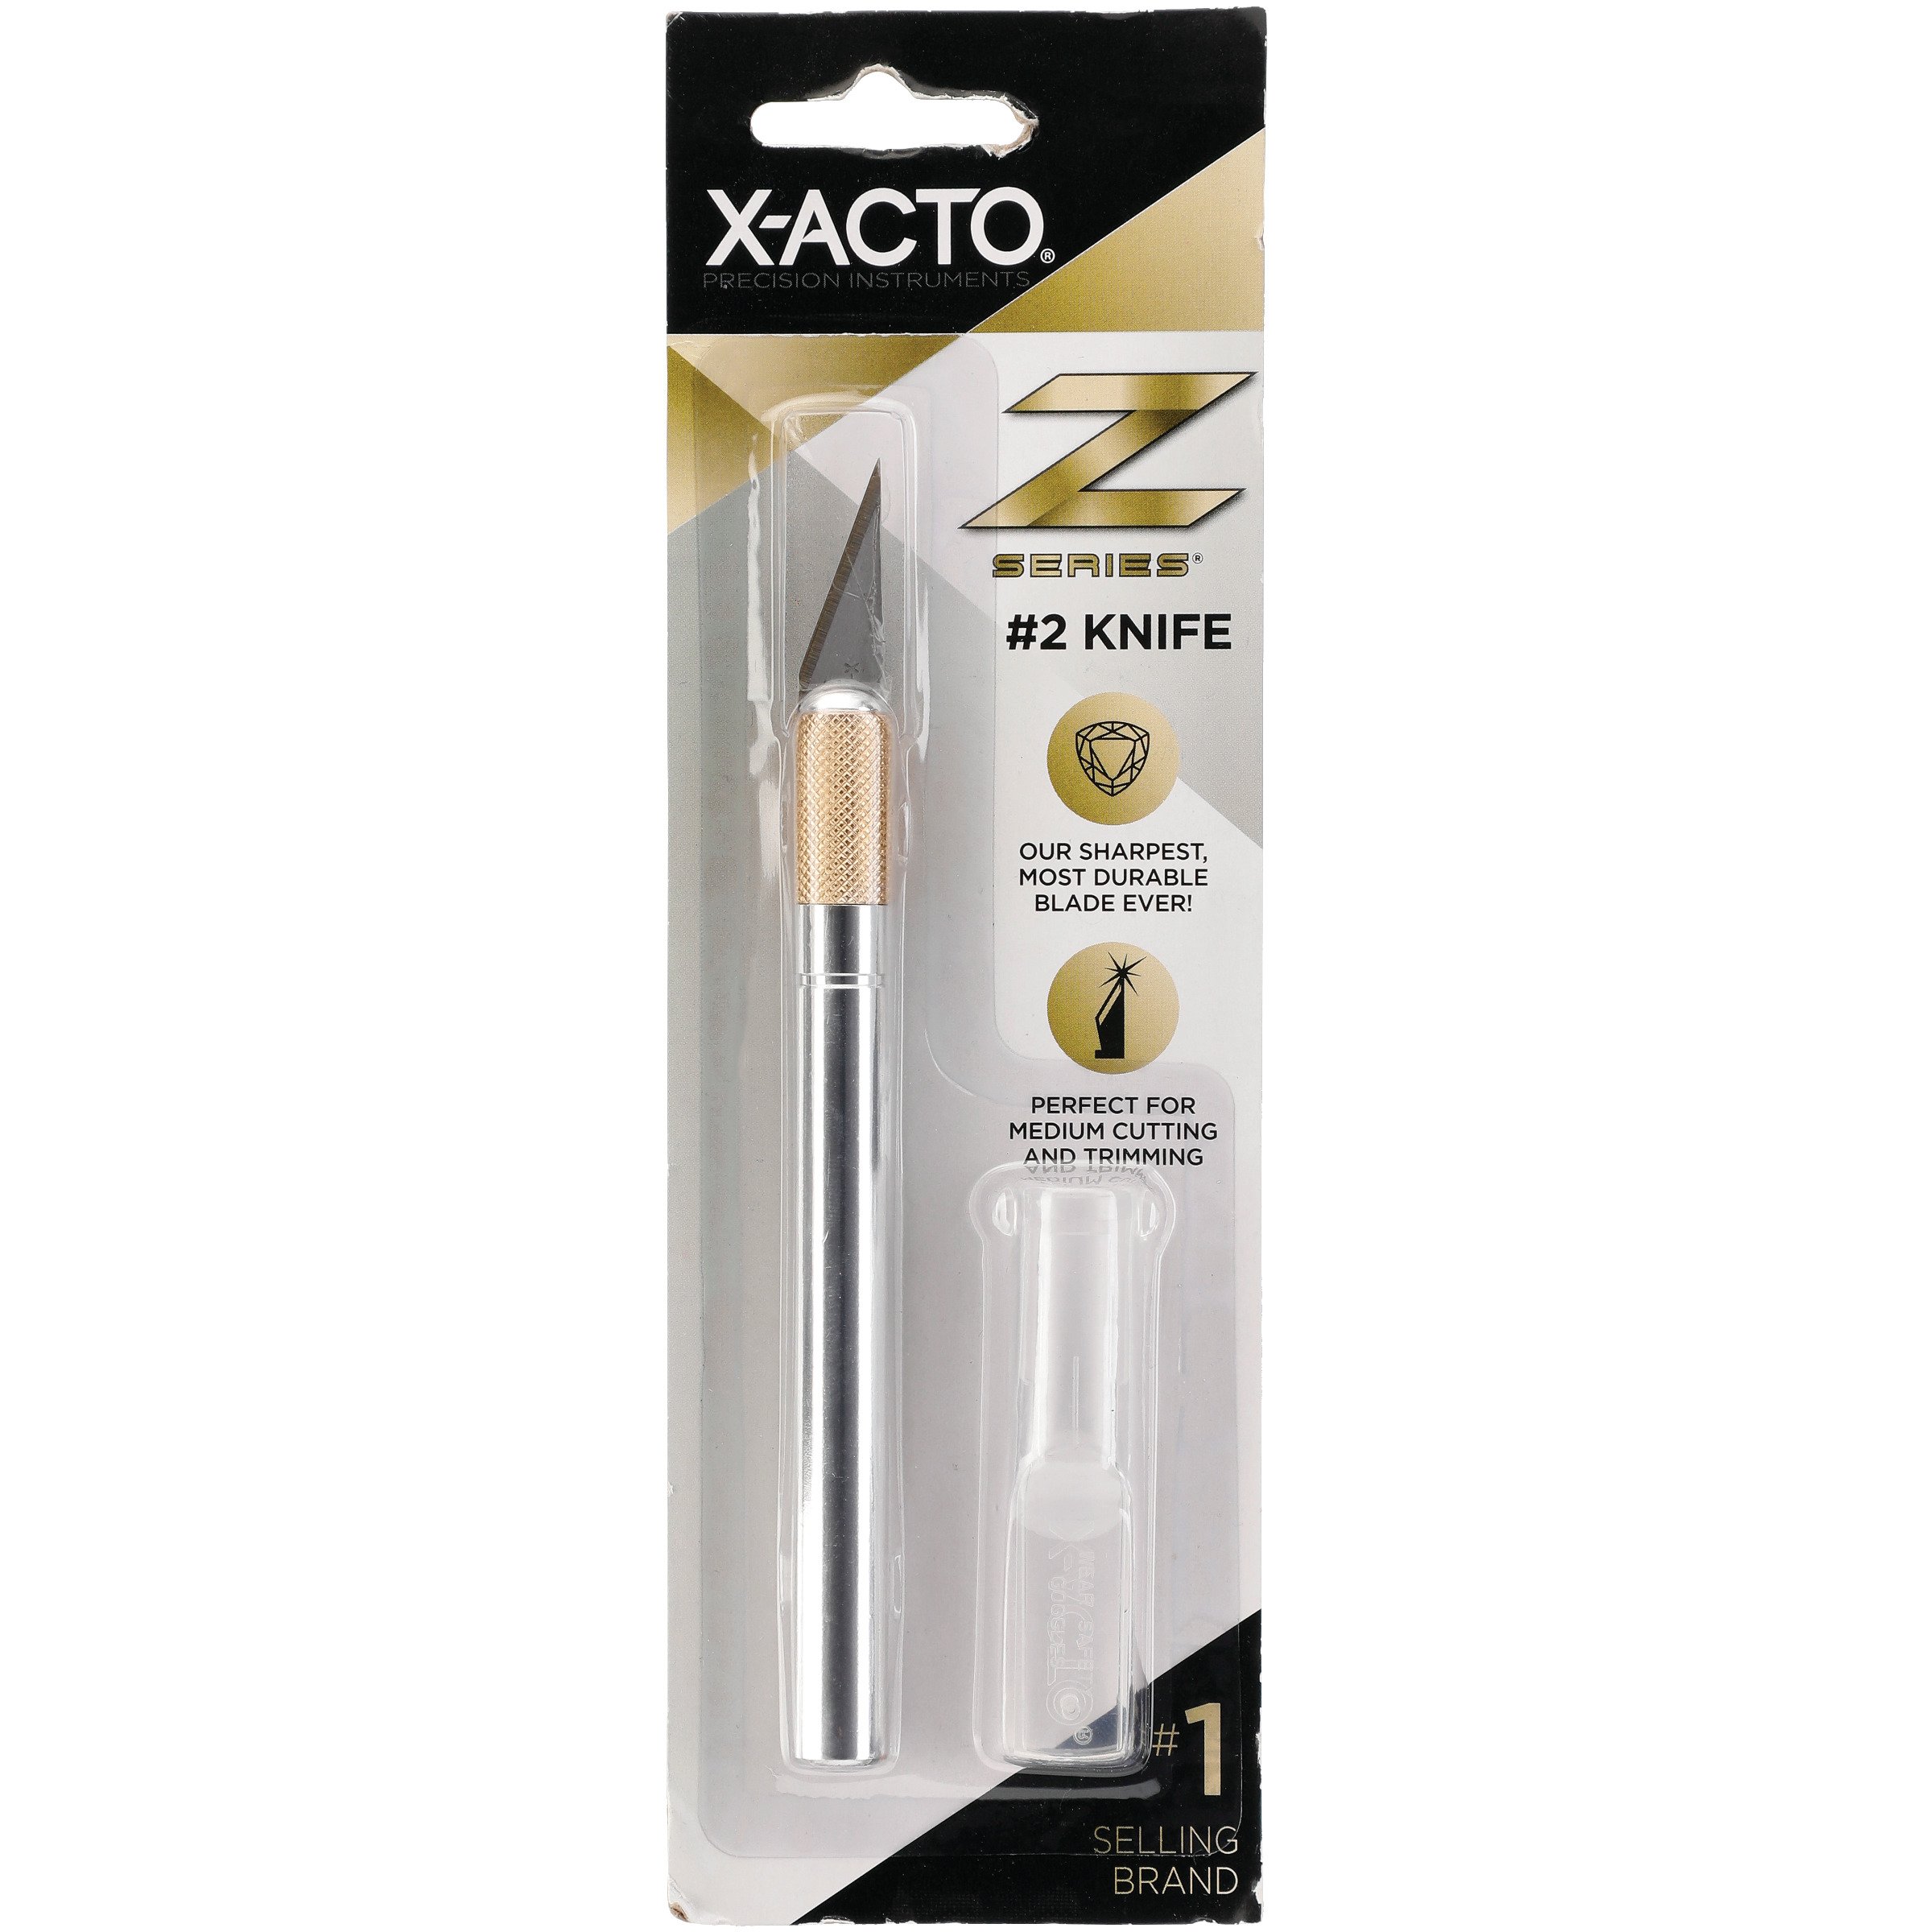 X-ACTO Z-Series #2 Knife